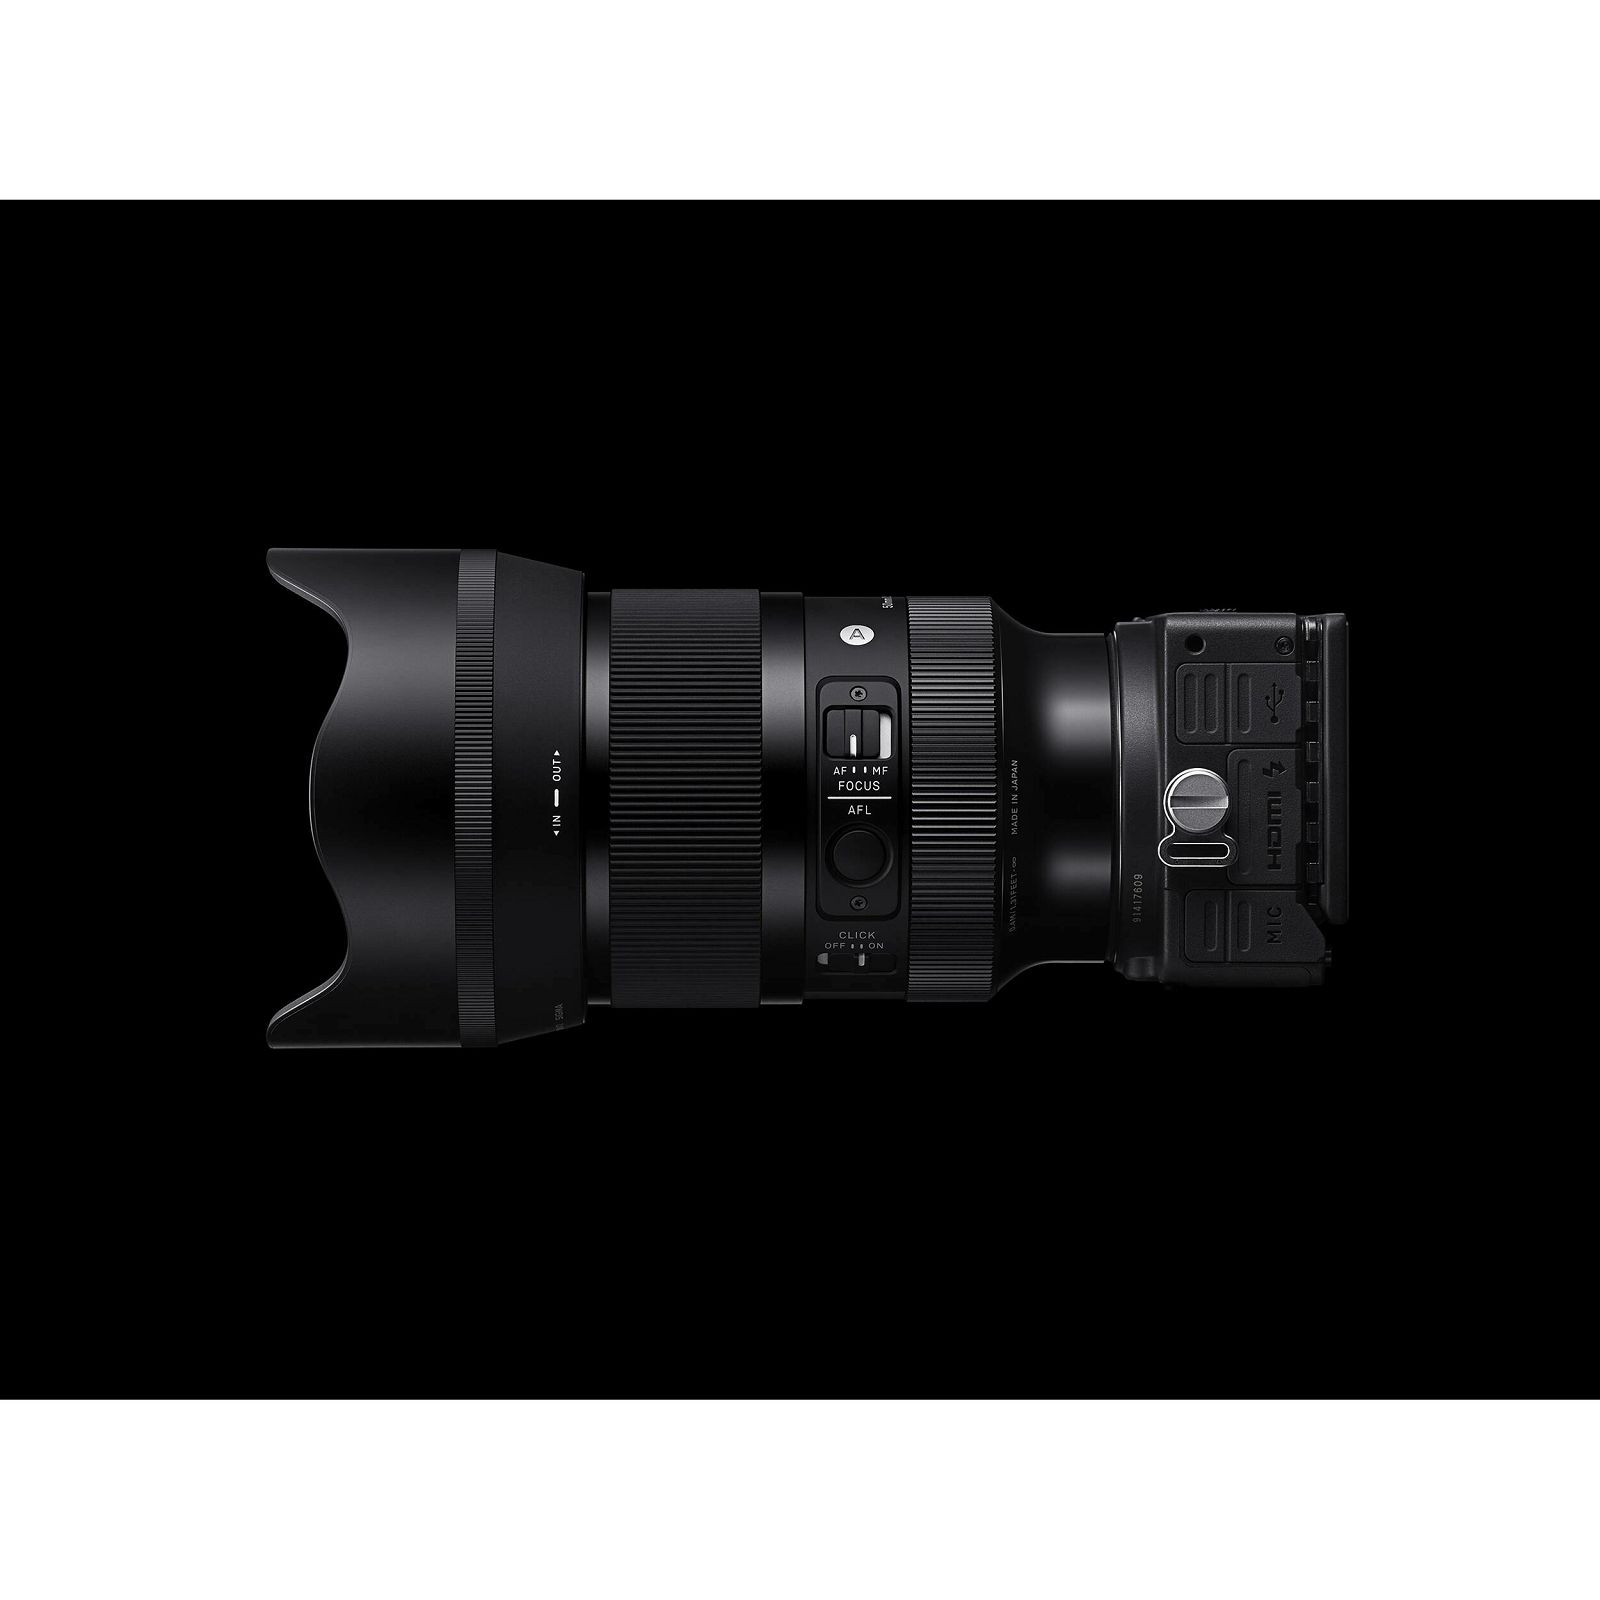 Sigma 50mm f/1.2 DG DN objektiv za Panasonic Leica L-mount 